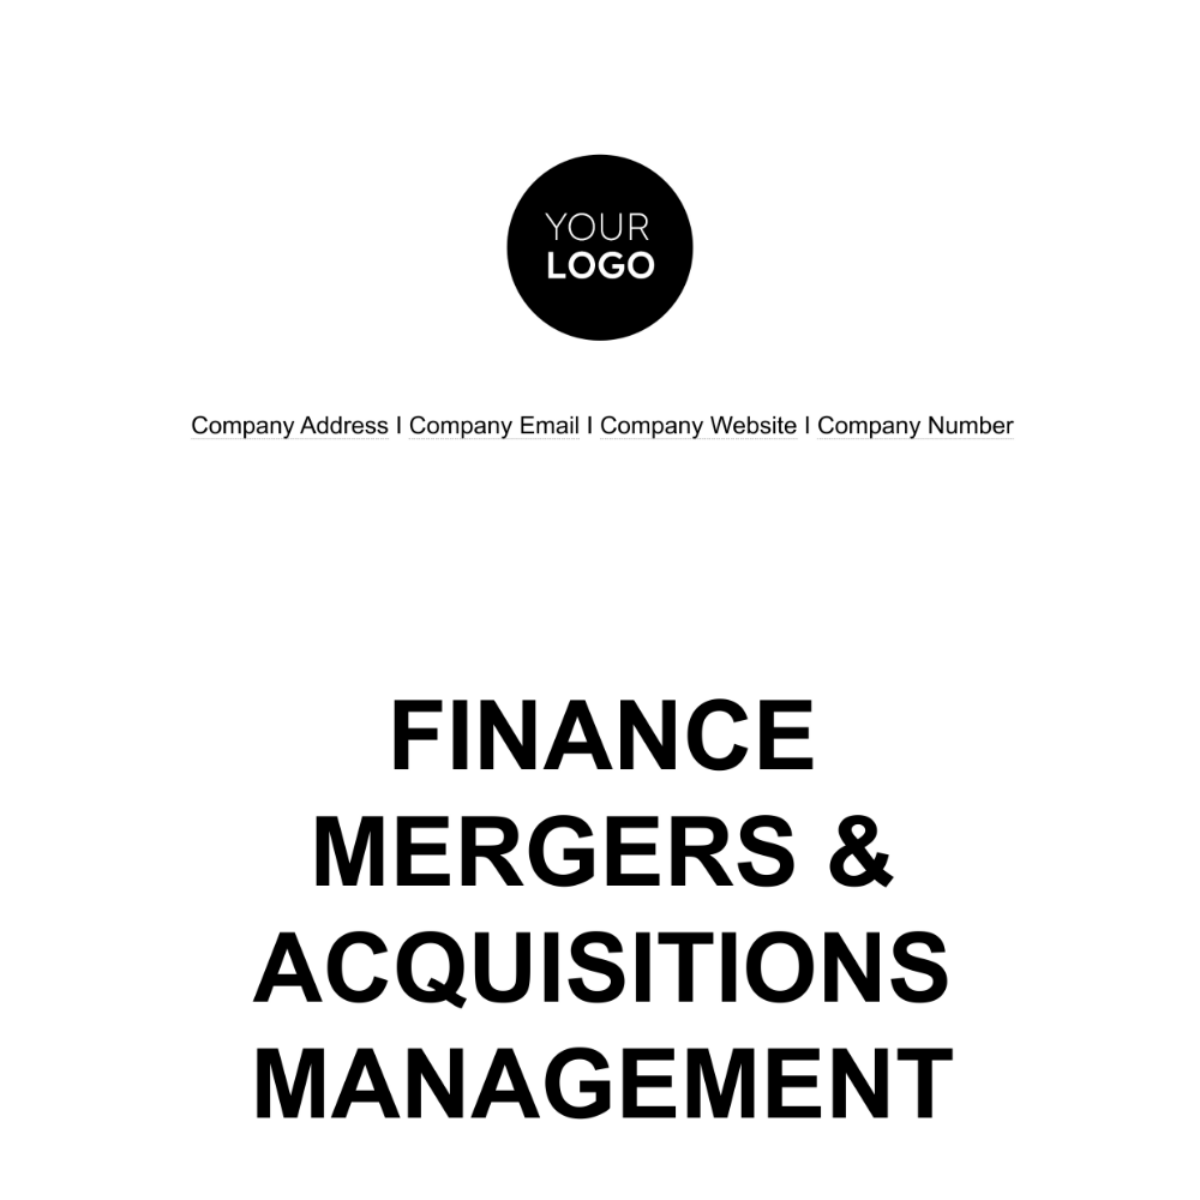 Finance Mergers & Acquisitions Management Template